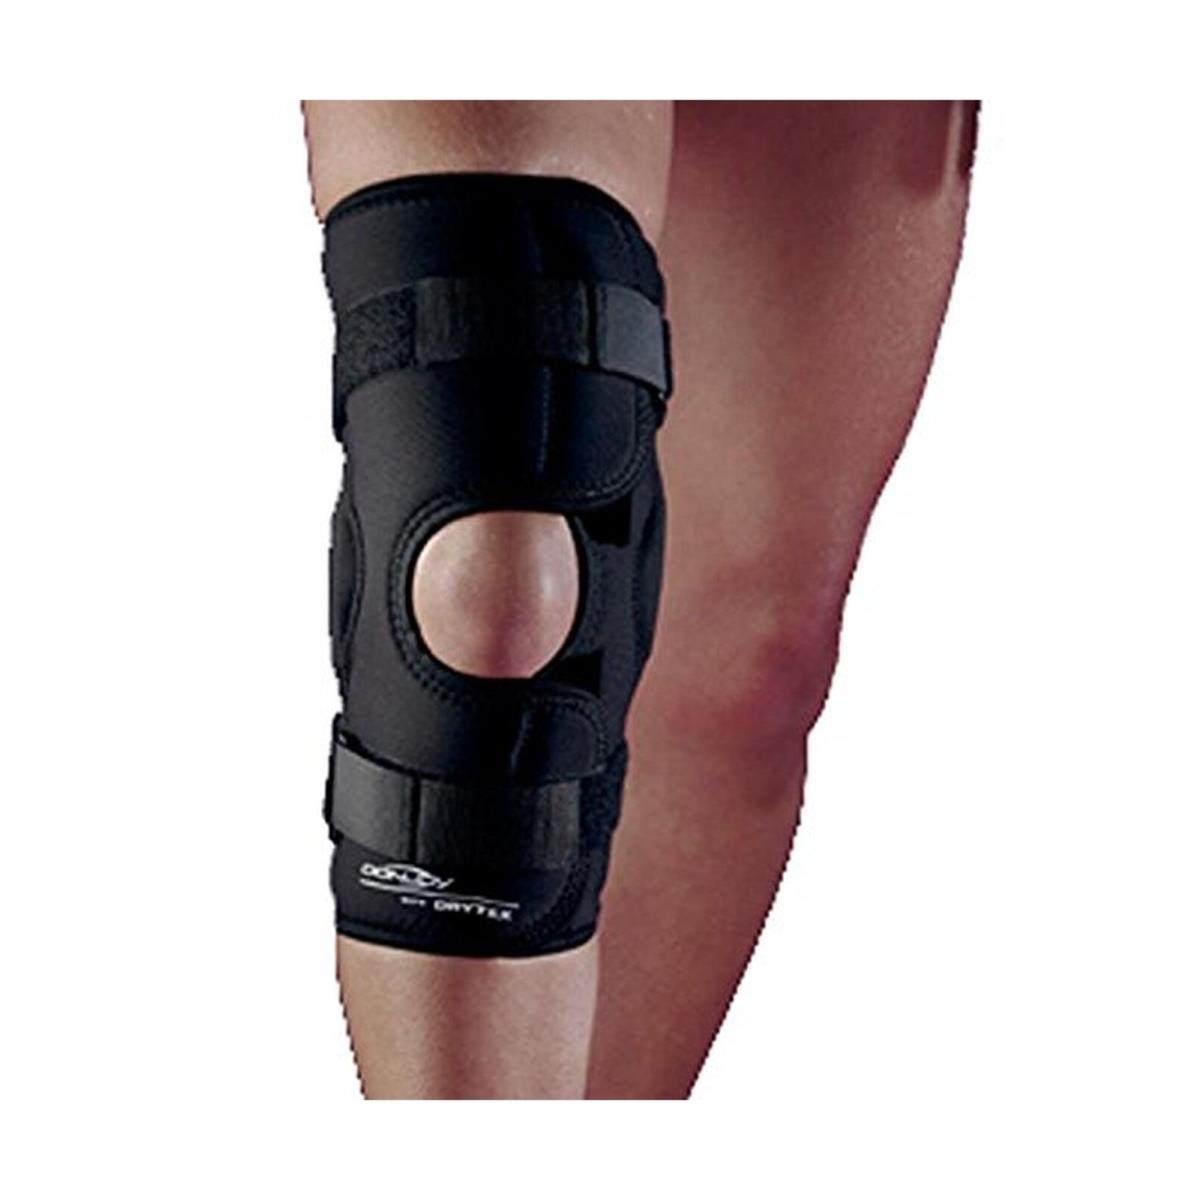 Donjoy Drytex Sport Hinged Knee Wraparound - Medium Pack of 1